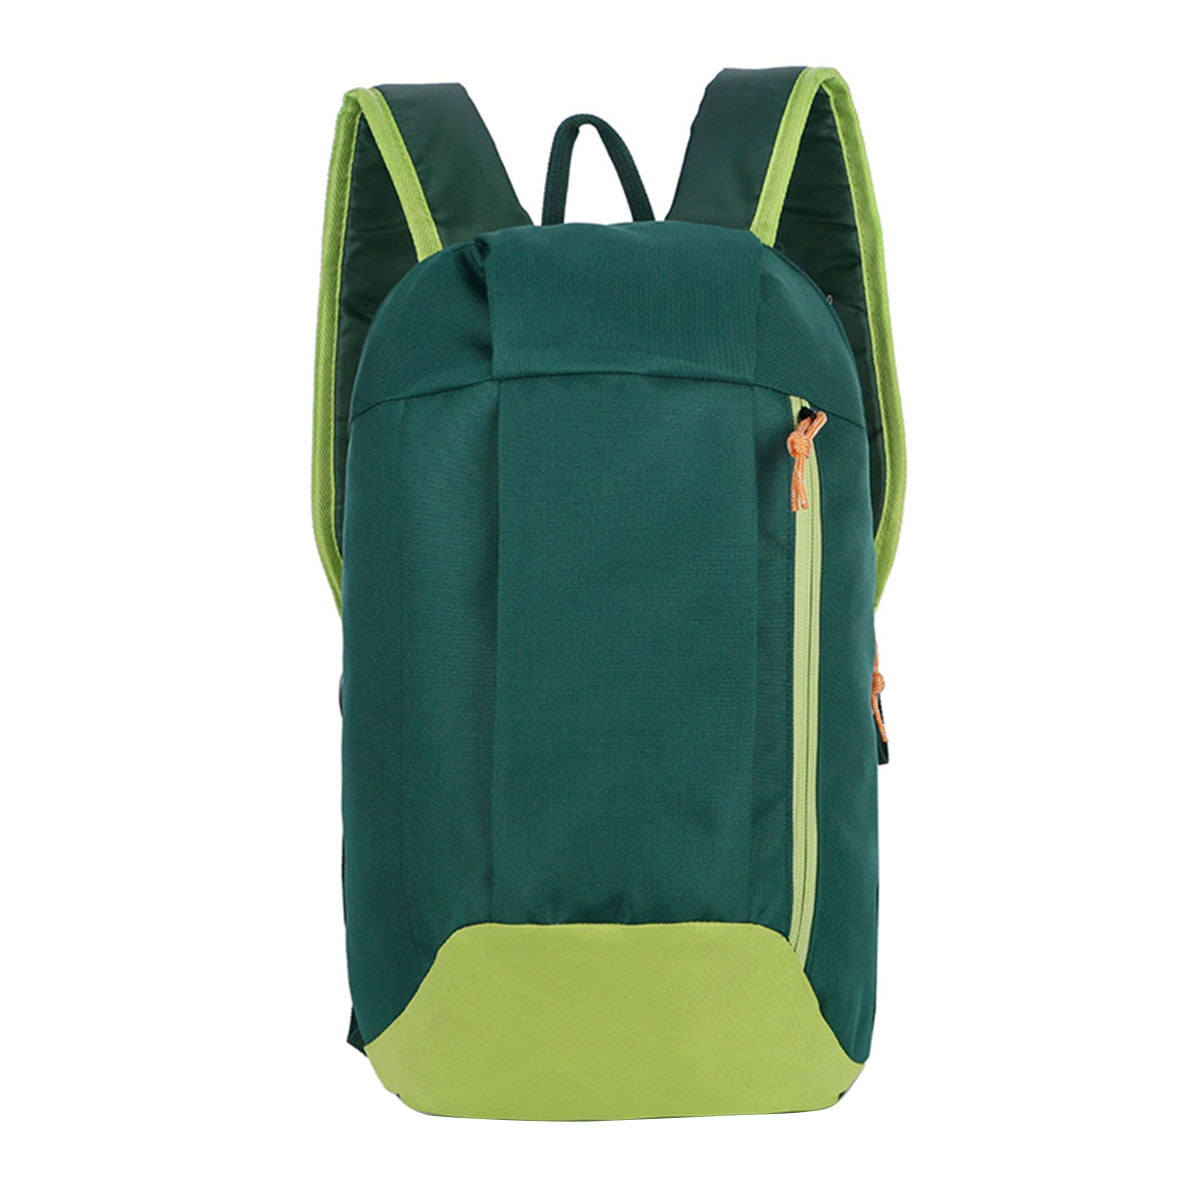 Multi-functional 10L Travel Backpack Lightweight Men Women Outdoors Leisure Bag